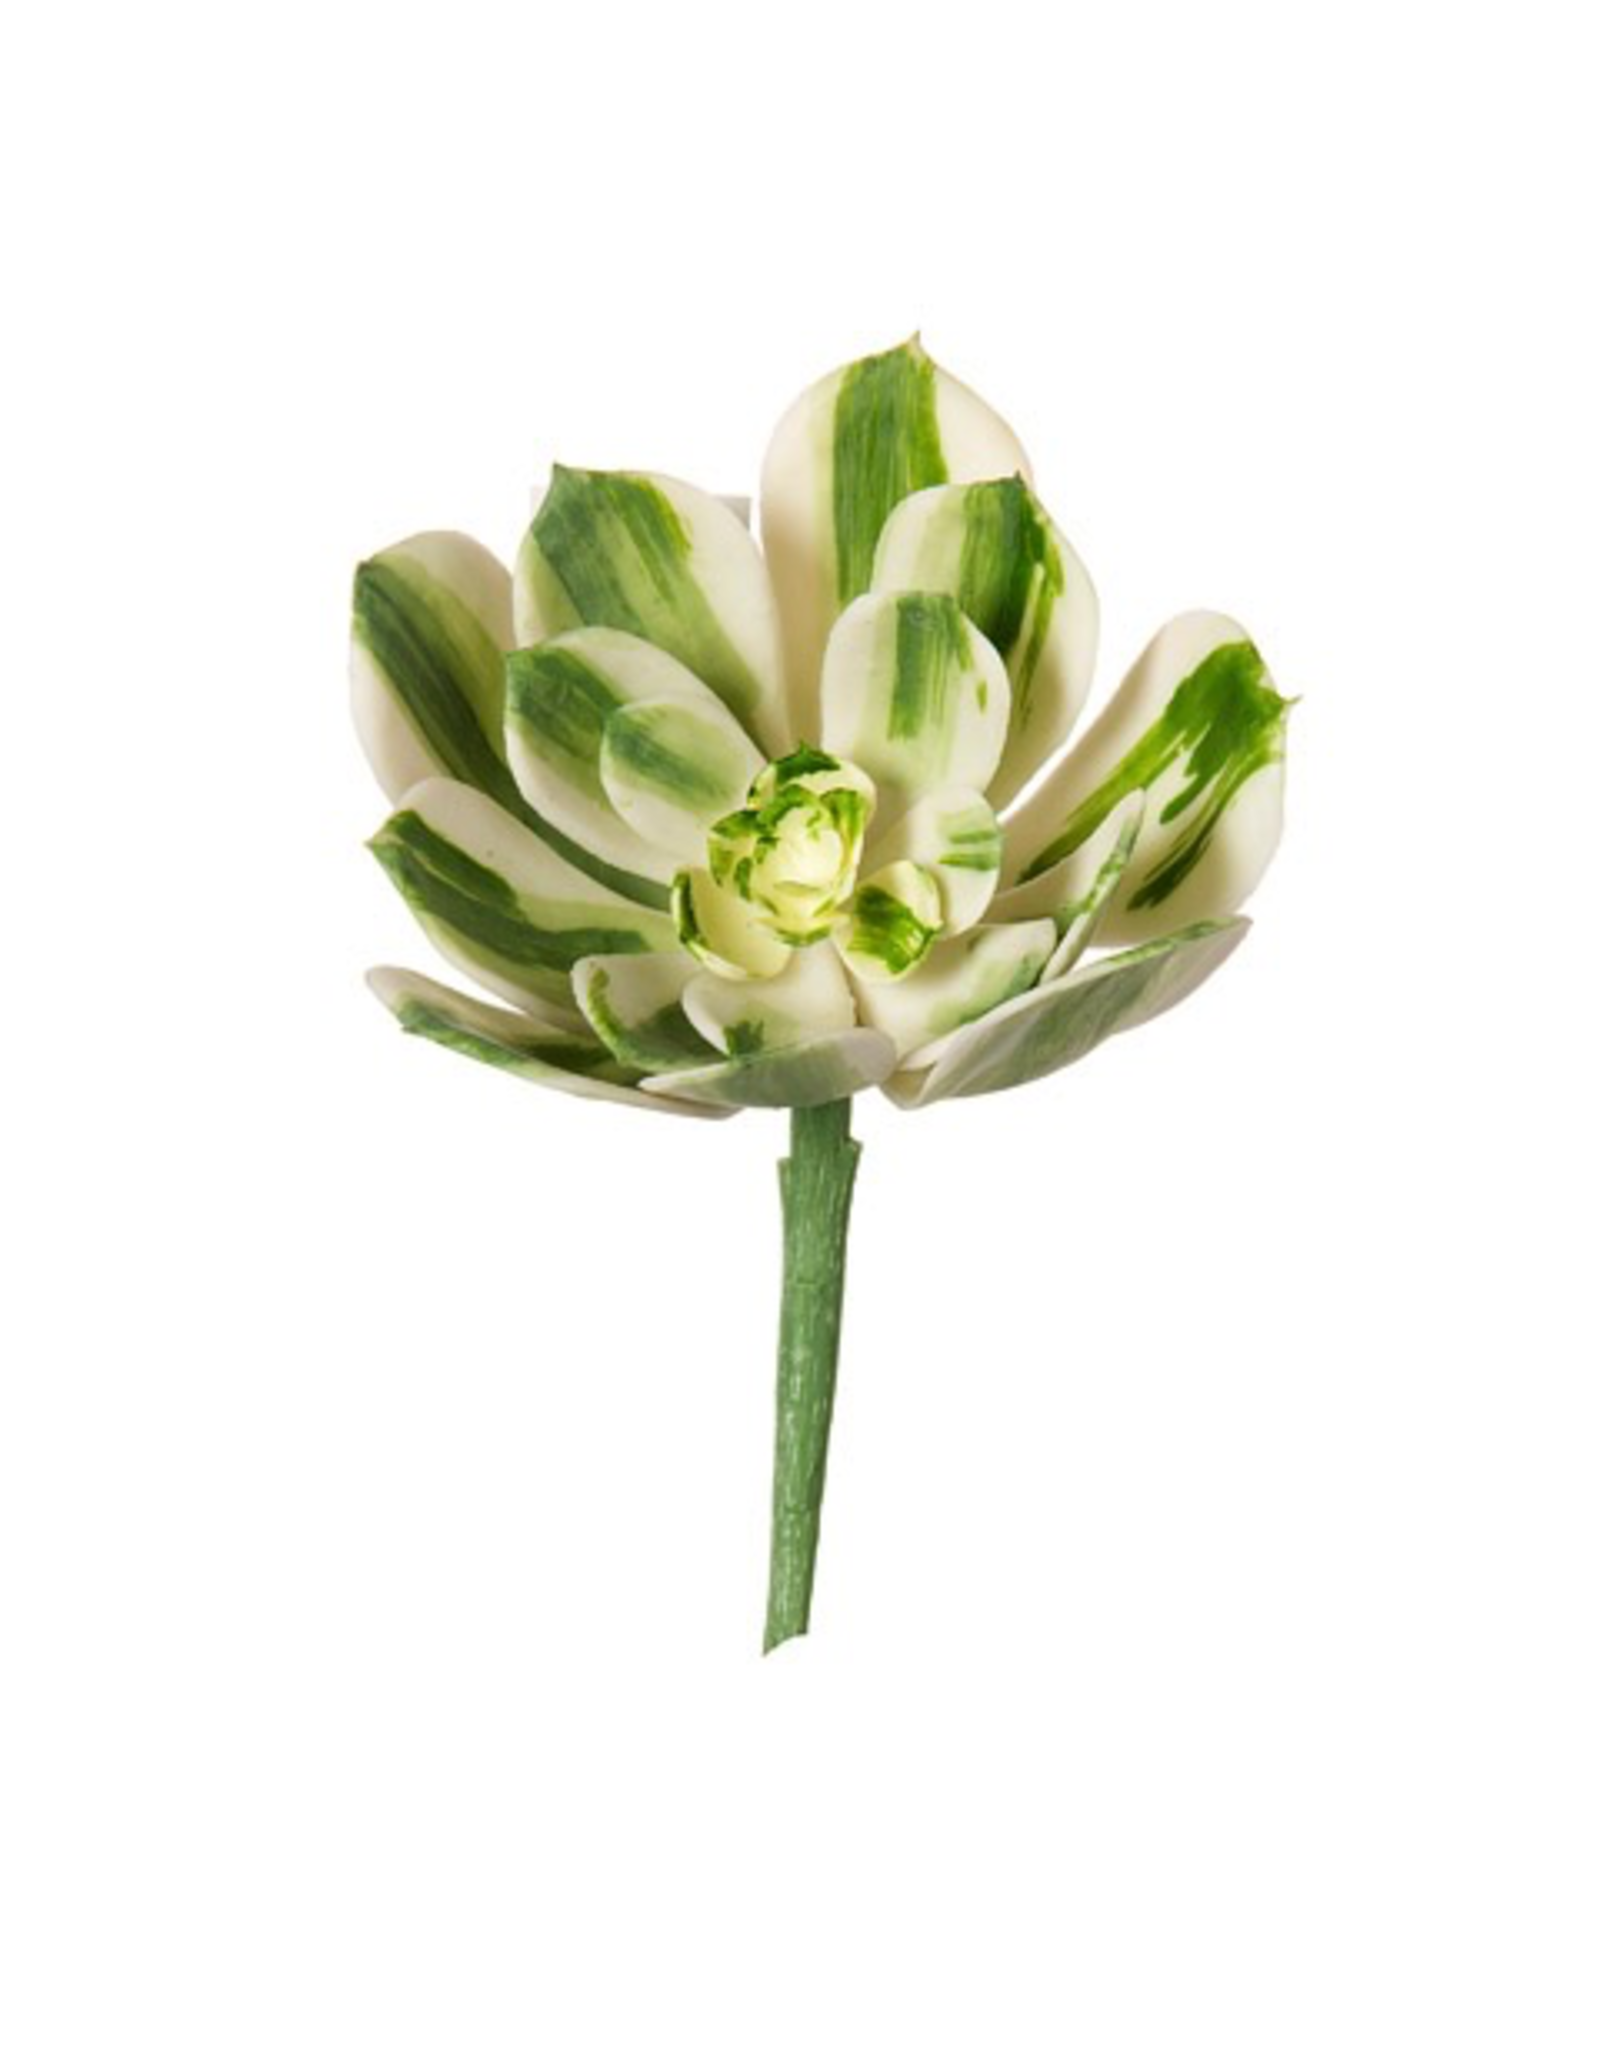 Darice Artificial Succulents Green w White Stripes Pick 3.75 inch